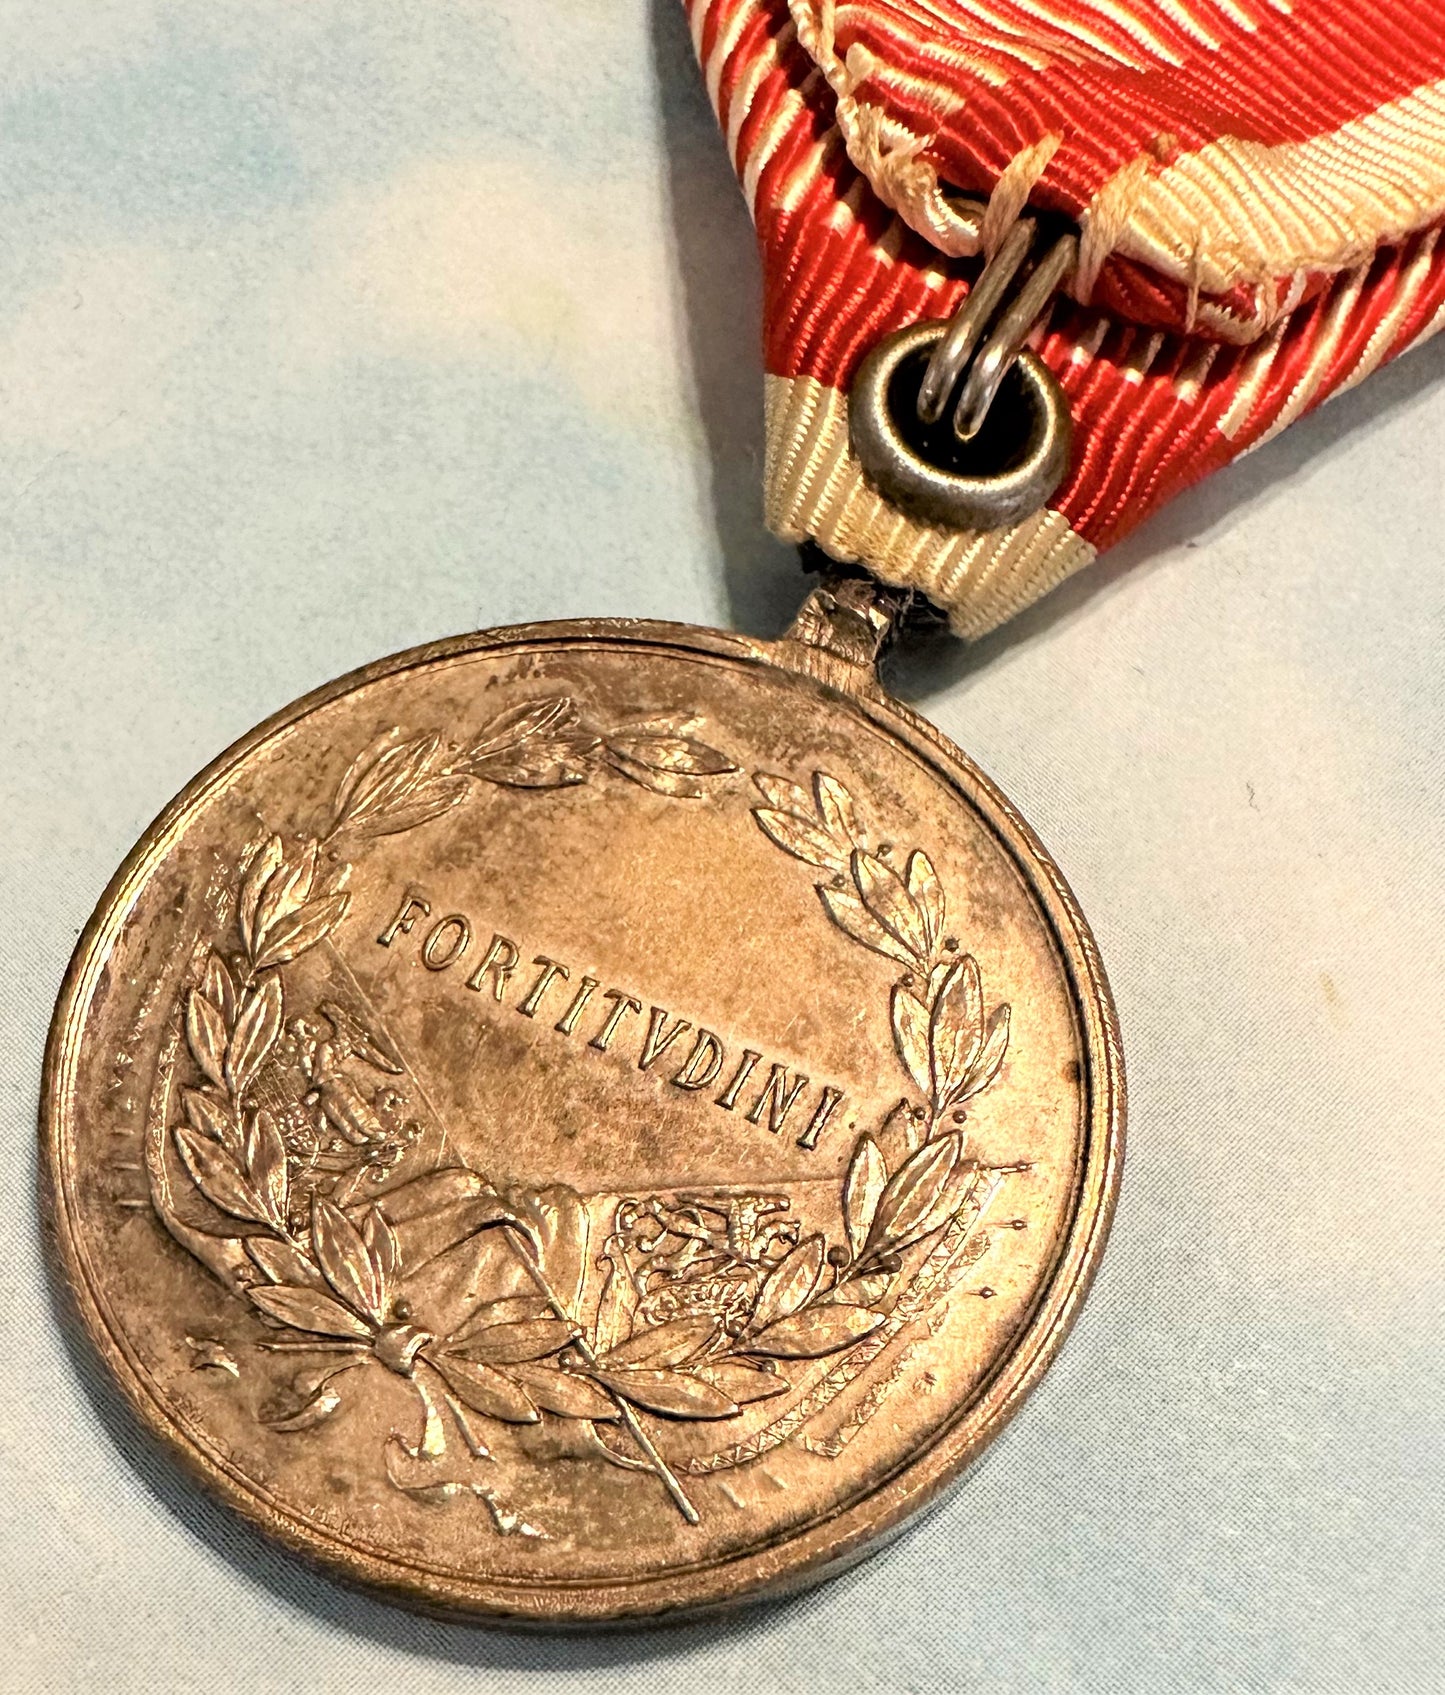 Austria - Kaiser Karl Silver Service Medal - An Emblem of Distinguished Service - Derrittmeister Militaria Group